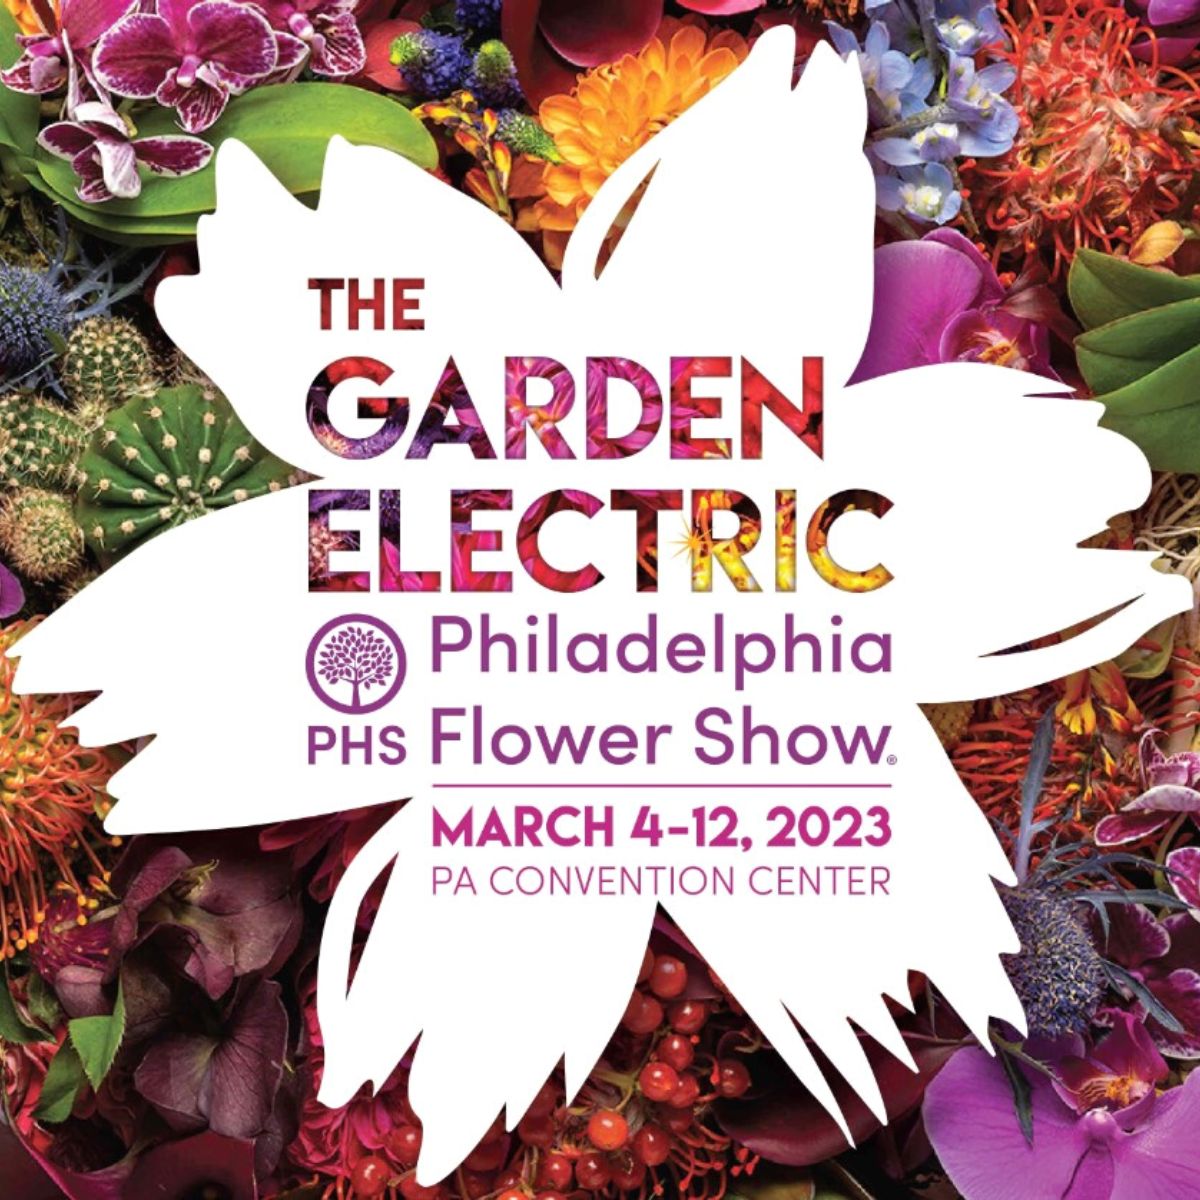 Philadelphia Flower Show featured